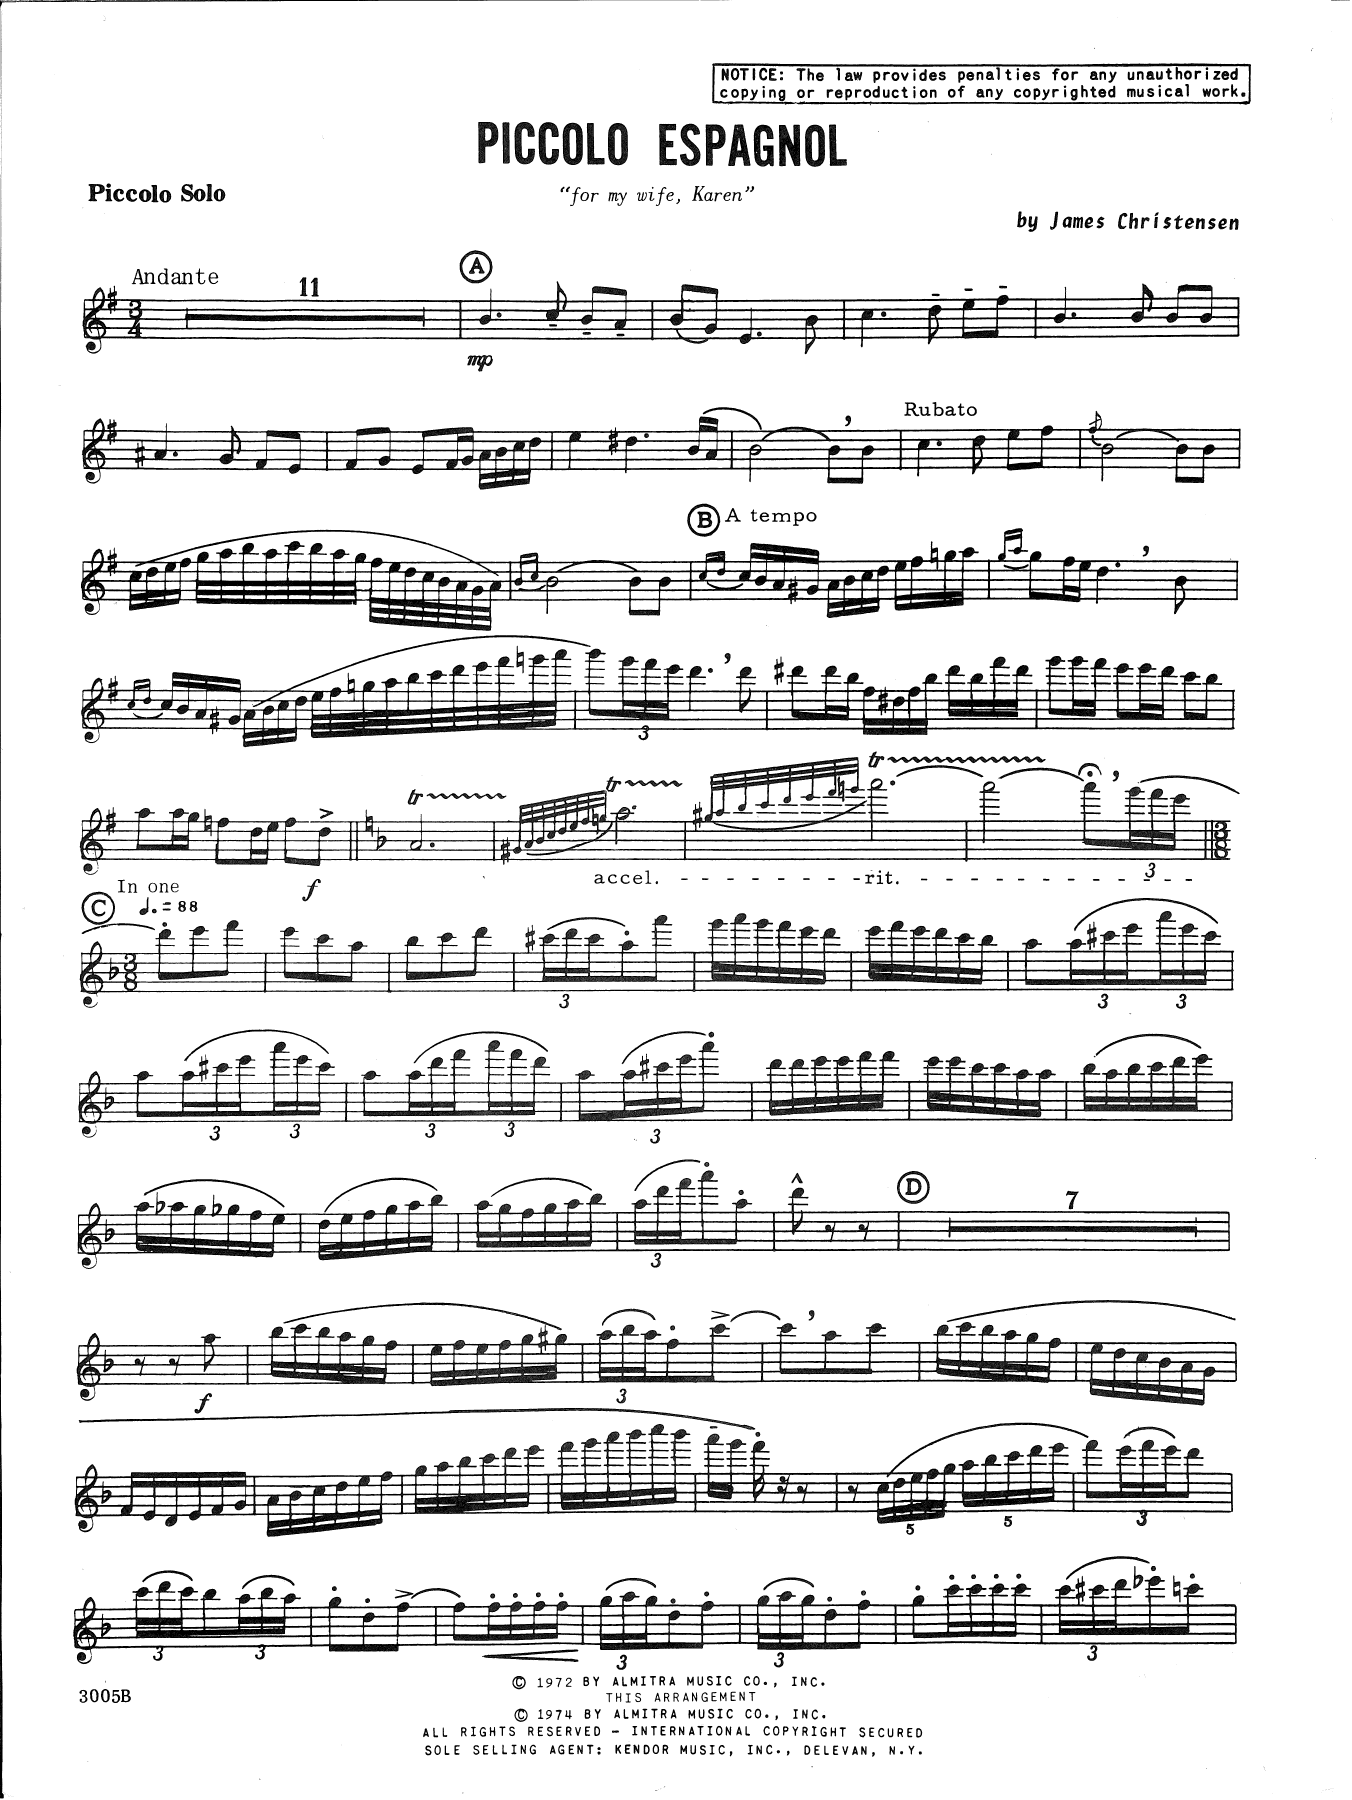 Download James Christensen Piccolo Espagnol - Piano (optional) Sheet Music